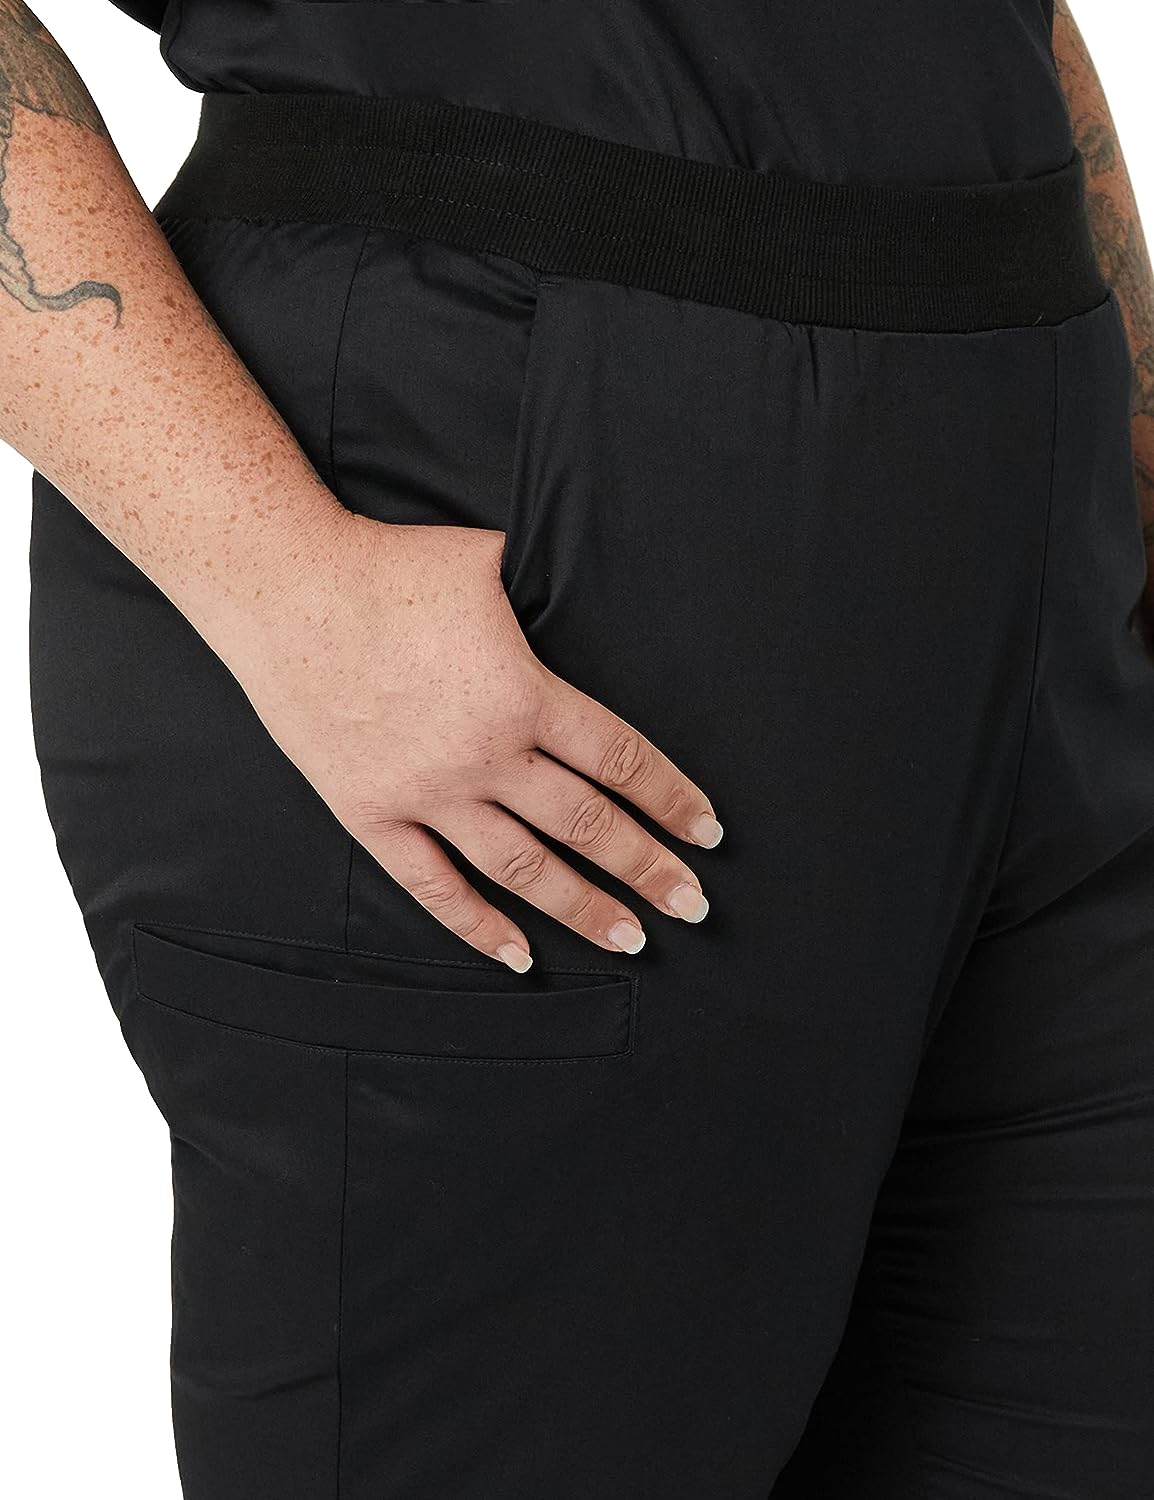 Amazon Essentials Women’s Slim Fit Jogger Scrub Pant Review